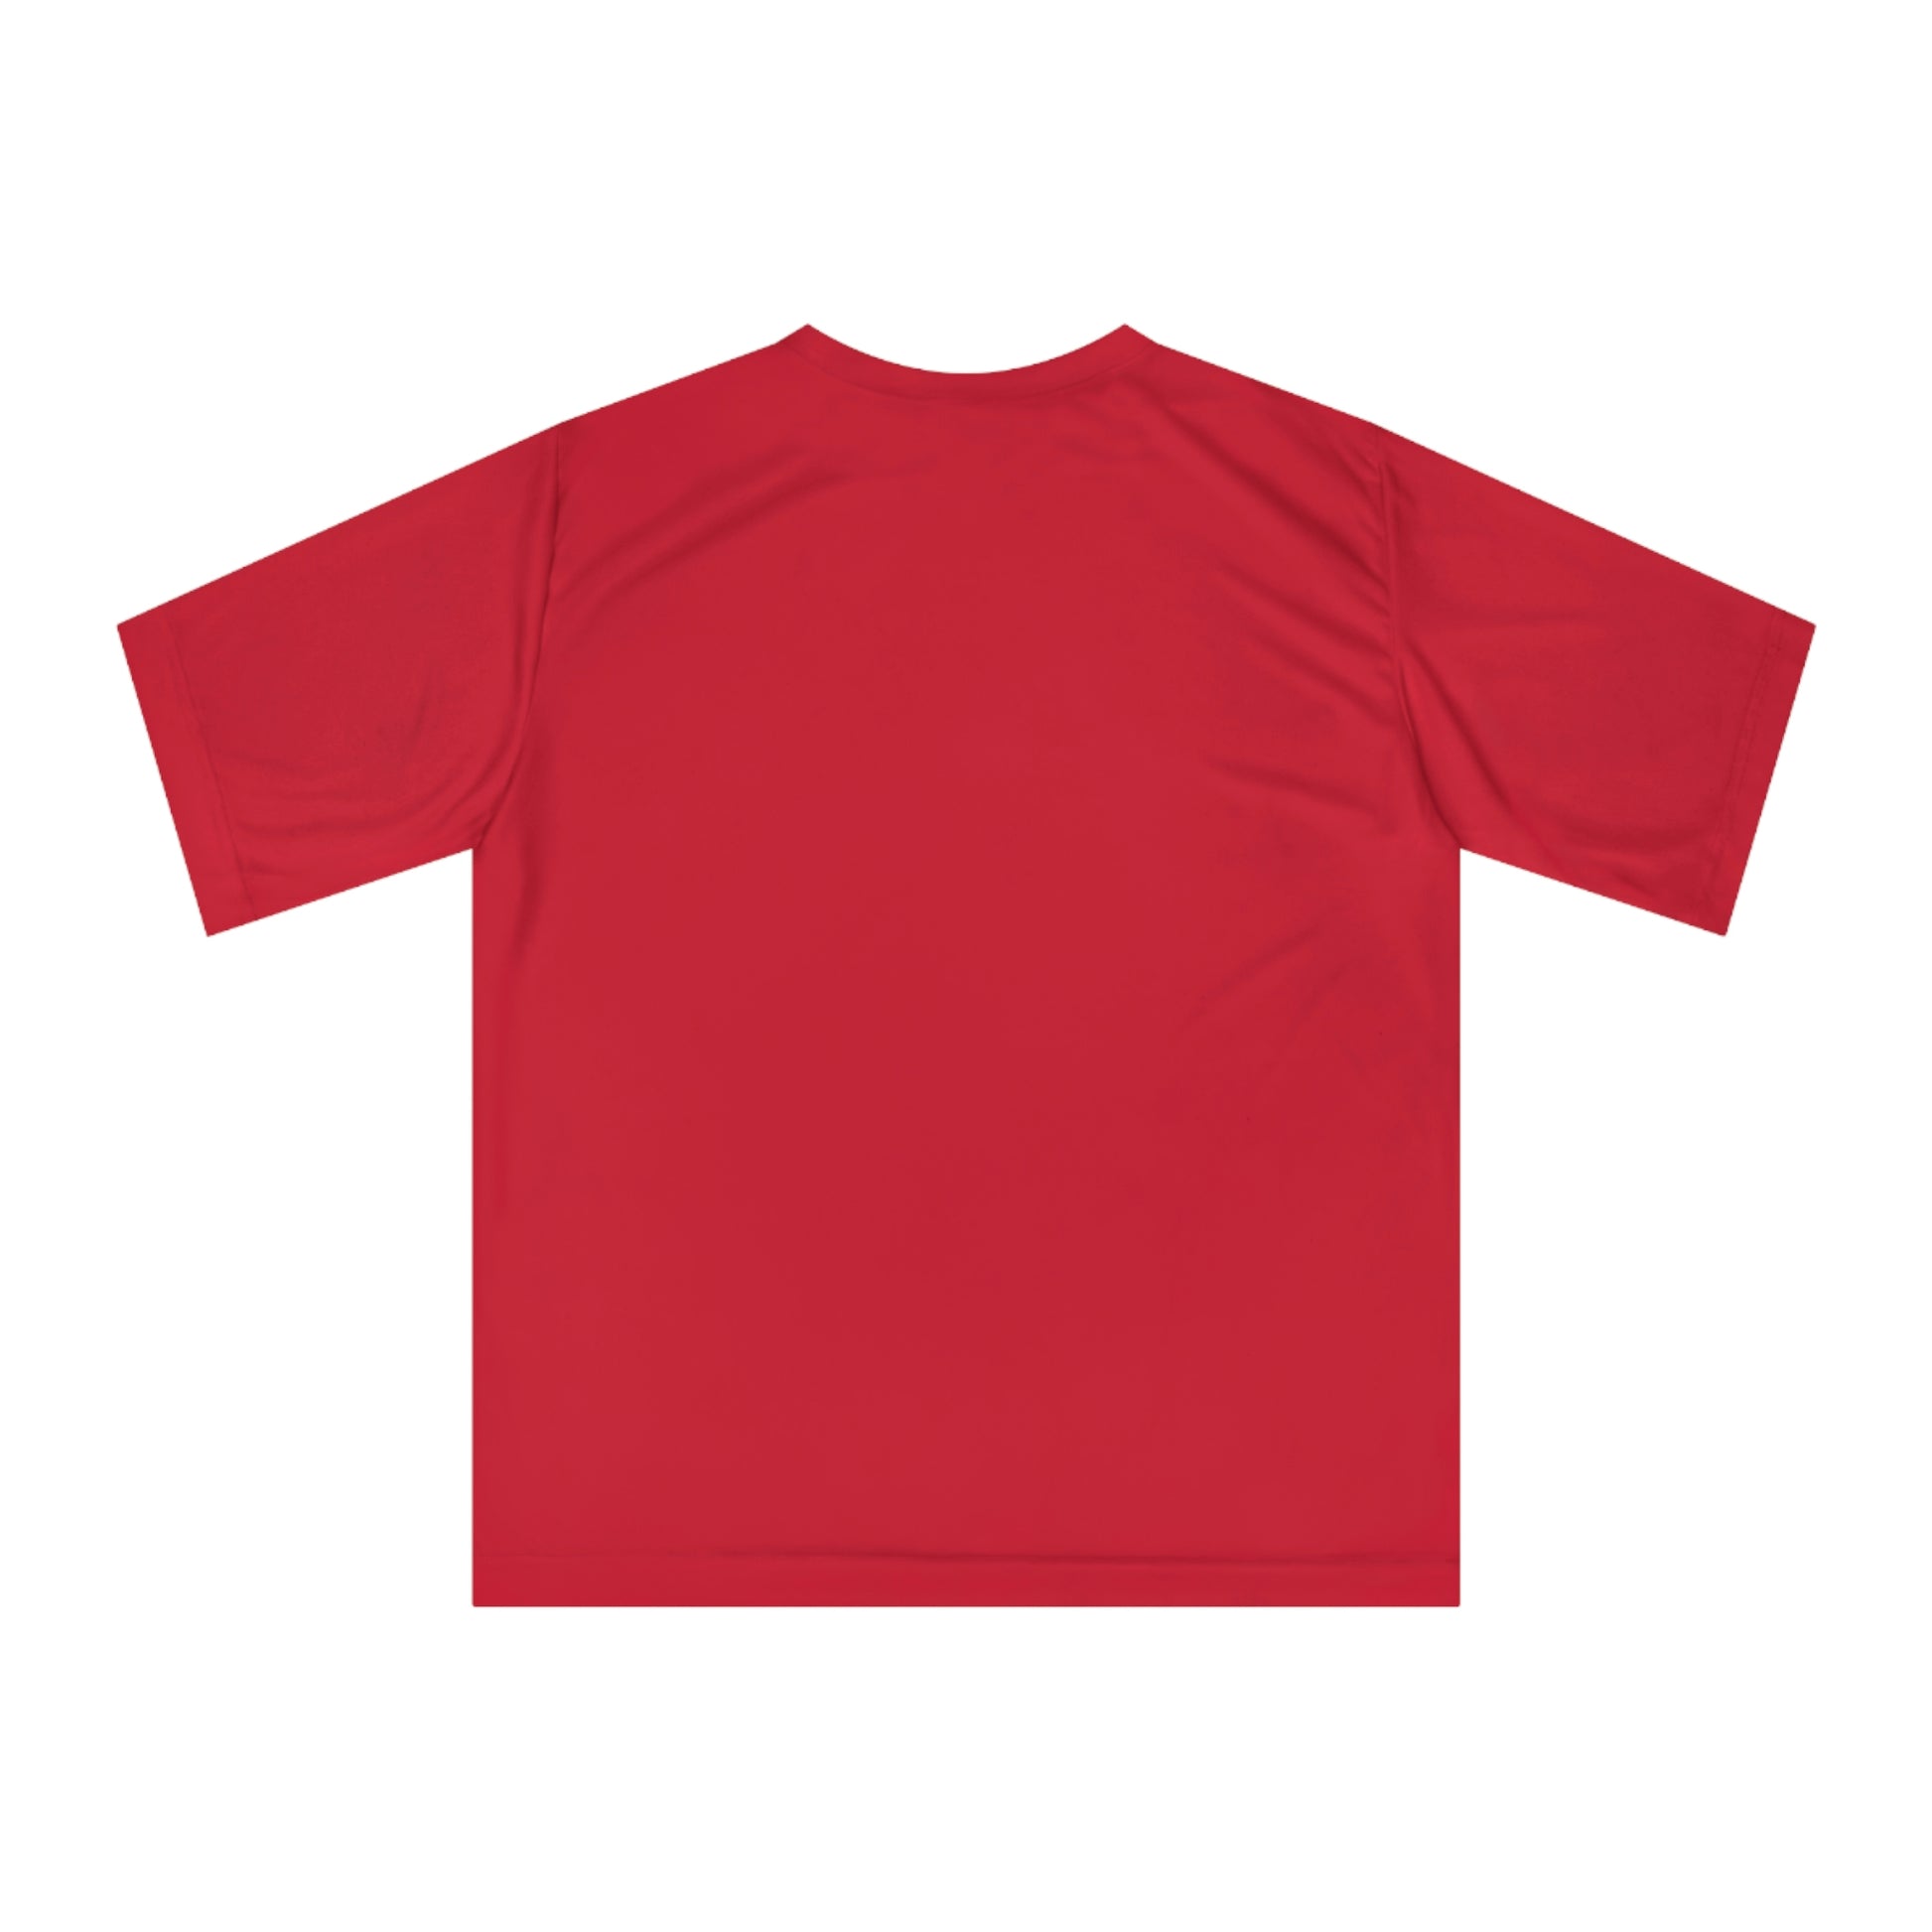 Purchase Unisex Zone Performance T-shirt For Cheap Price - WomenNtech